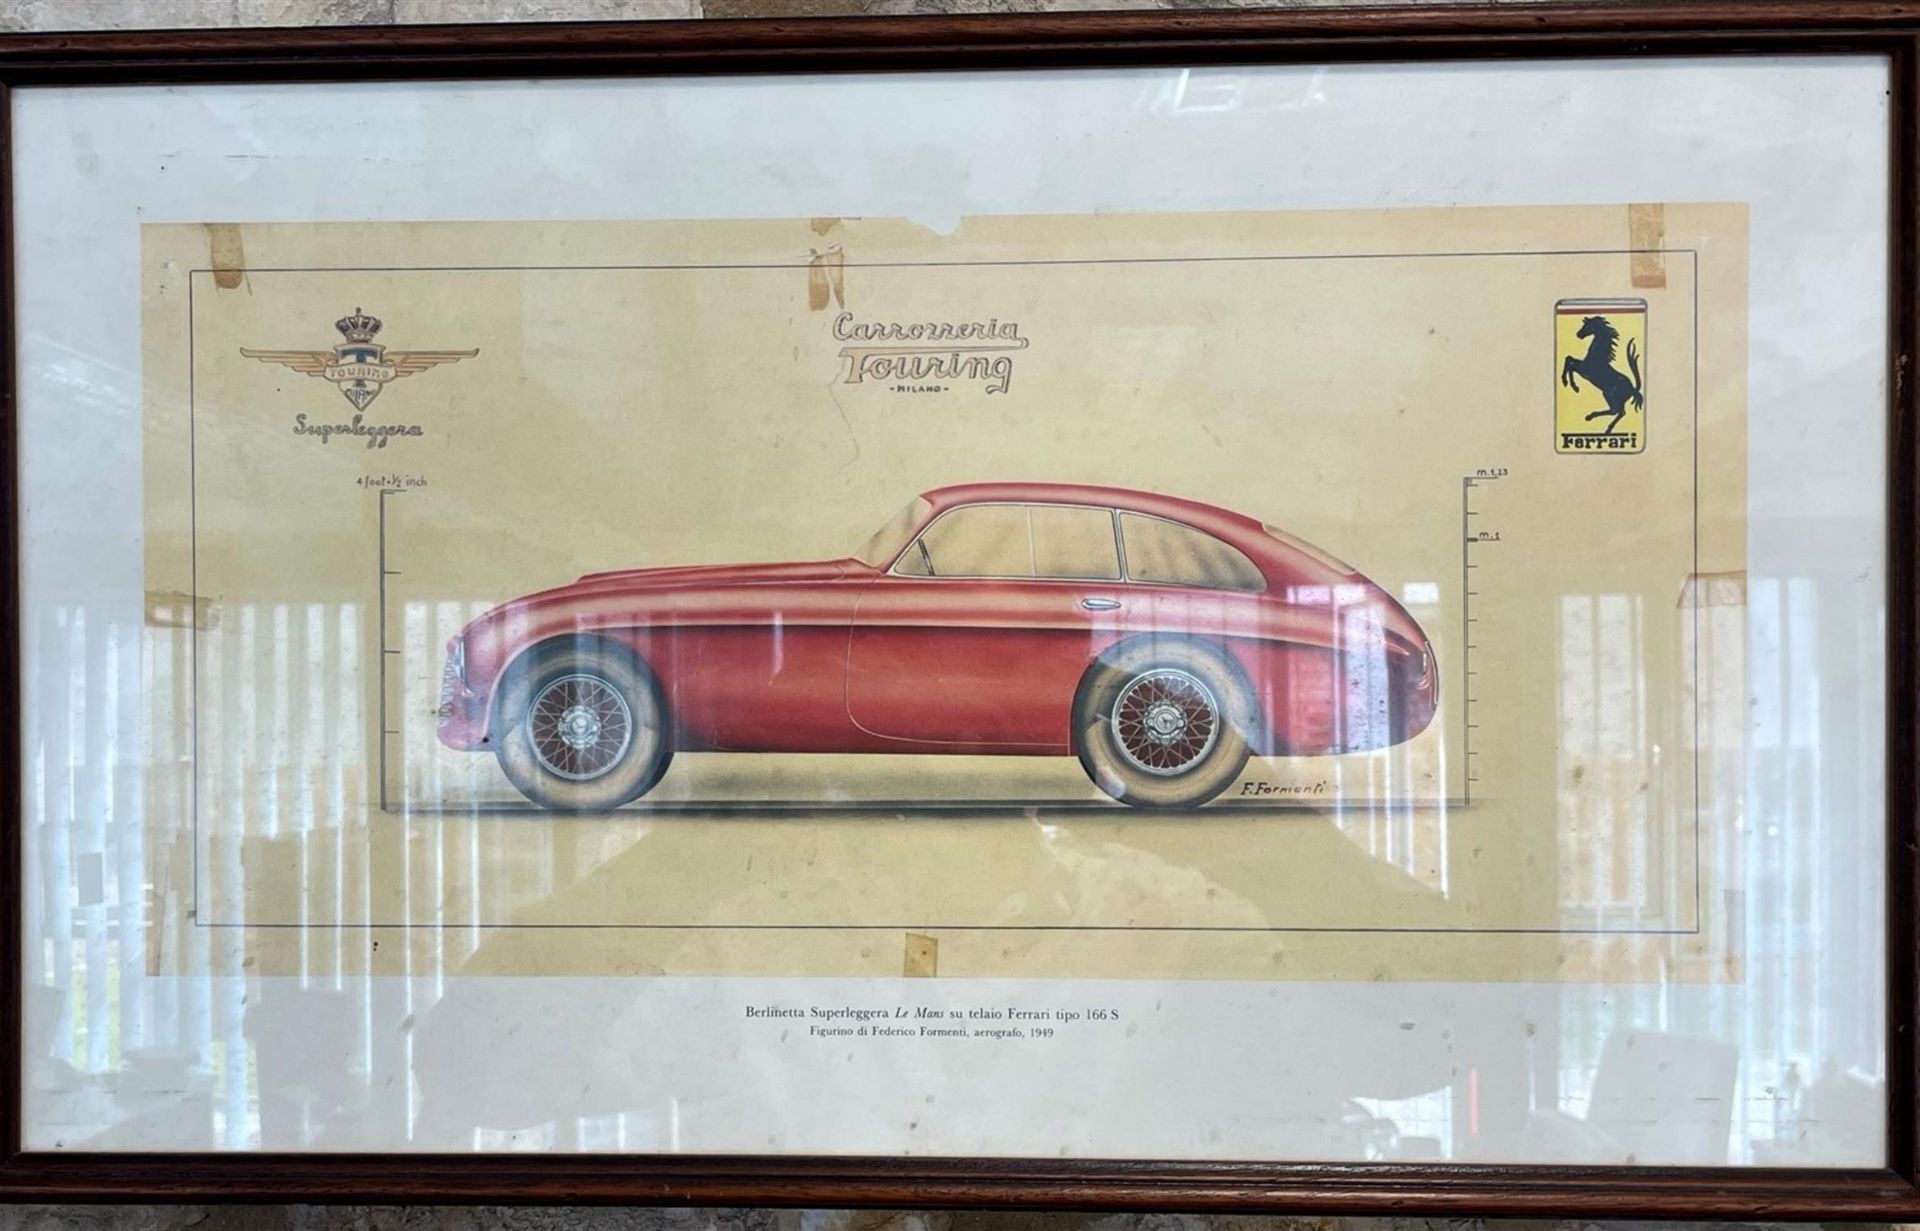 Period design submission from Carrozzeria Touring Milano to Enzo Ferrari in 1949 - Image 2 of 6